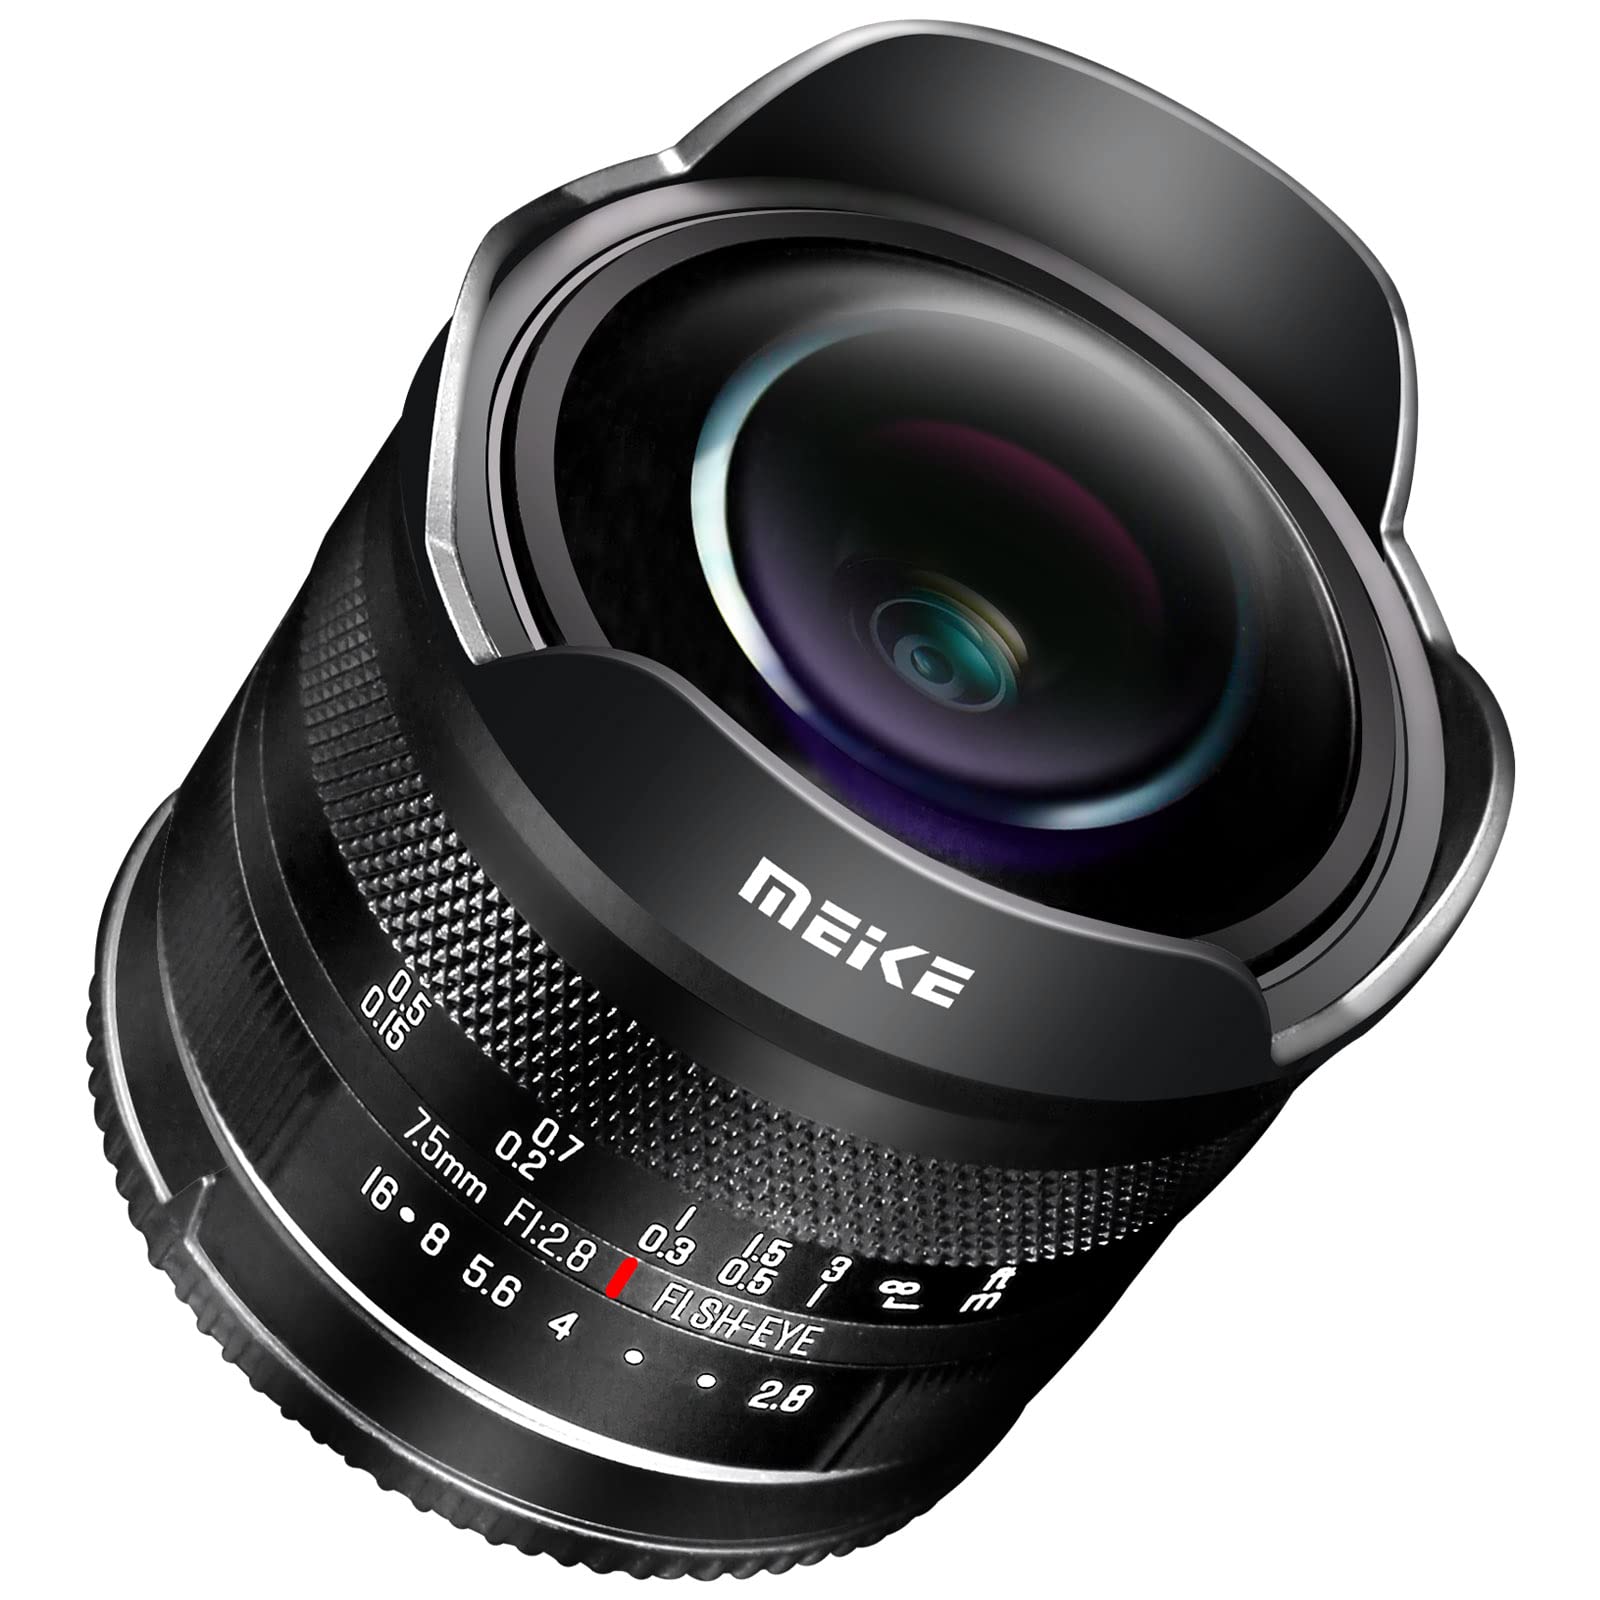 Meike 7.5mm f2.8 Ultra Wide Angle Manual Focus Diagonal Fisheye Lens for Sony E Mount Mirrorless Cameras A6400 A5000 A5100 A6000 A6100 A6300 A6500 A6600 A6700